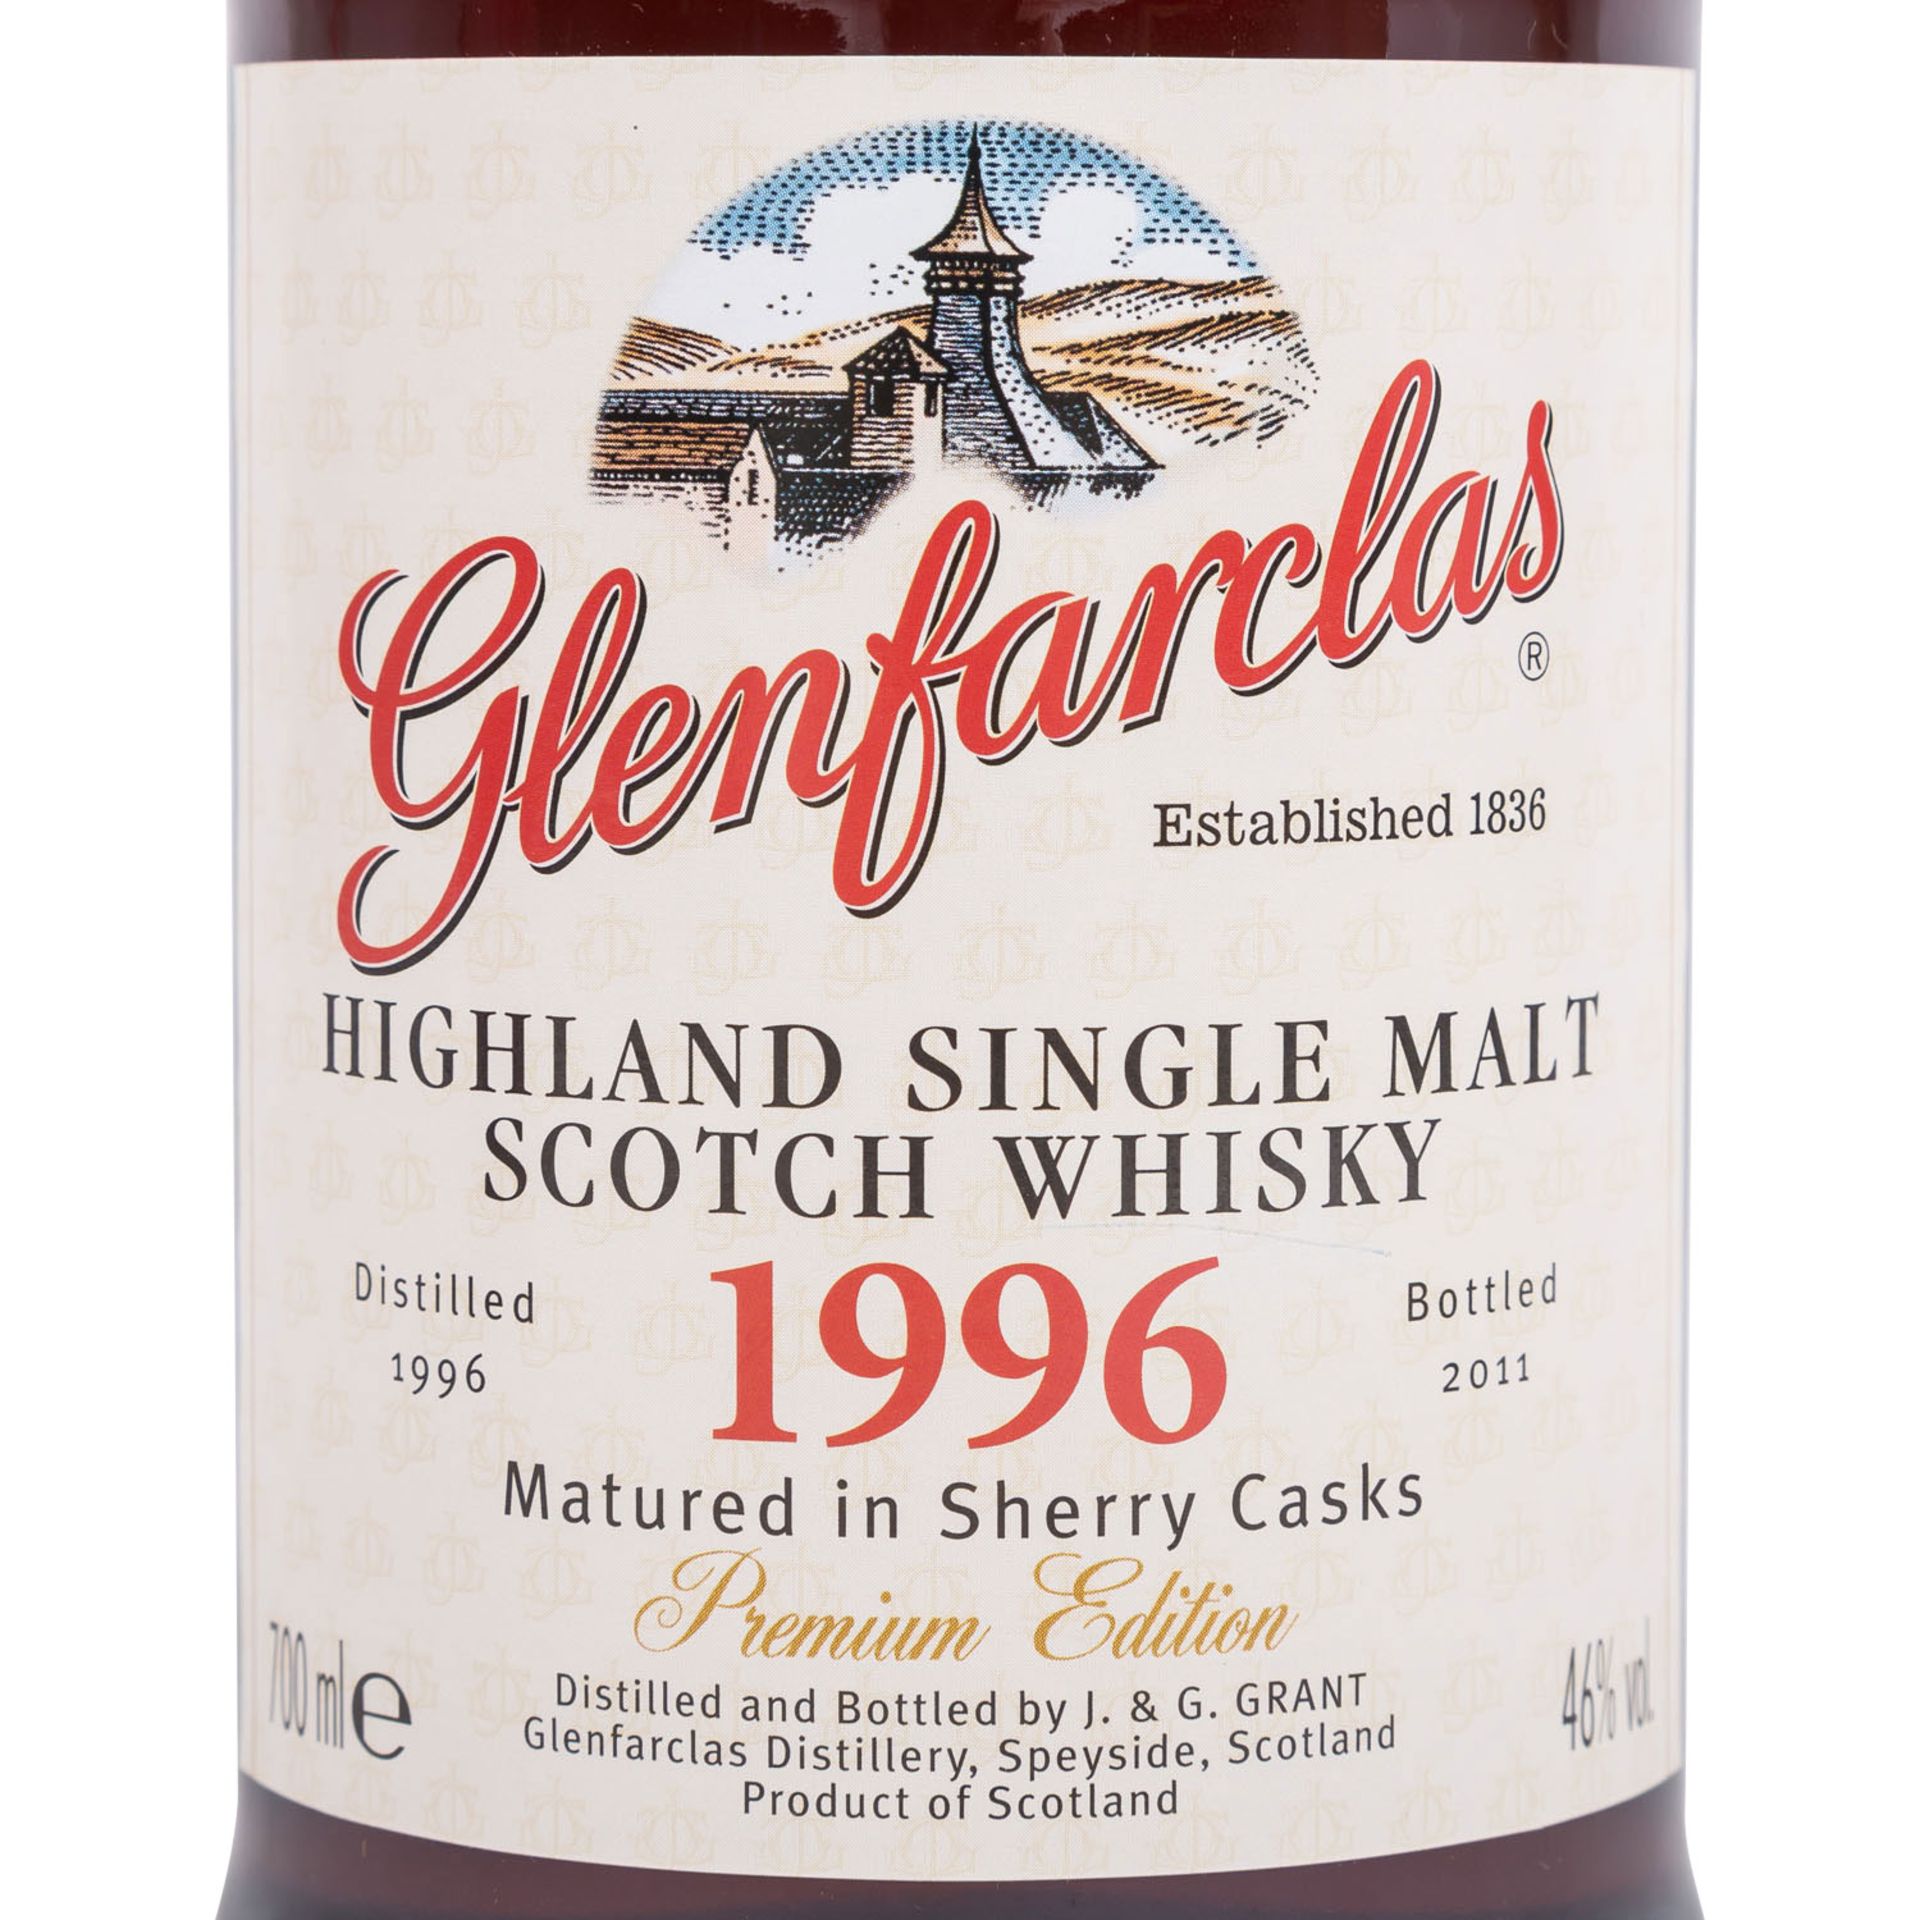 GLENFARCLAS Sherry Casks, Single Highland Malt Scotch Whisky 1996 Premium Edition - Image 2 of 8